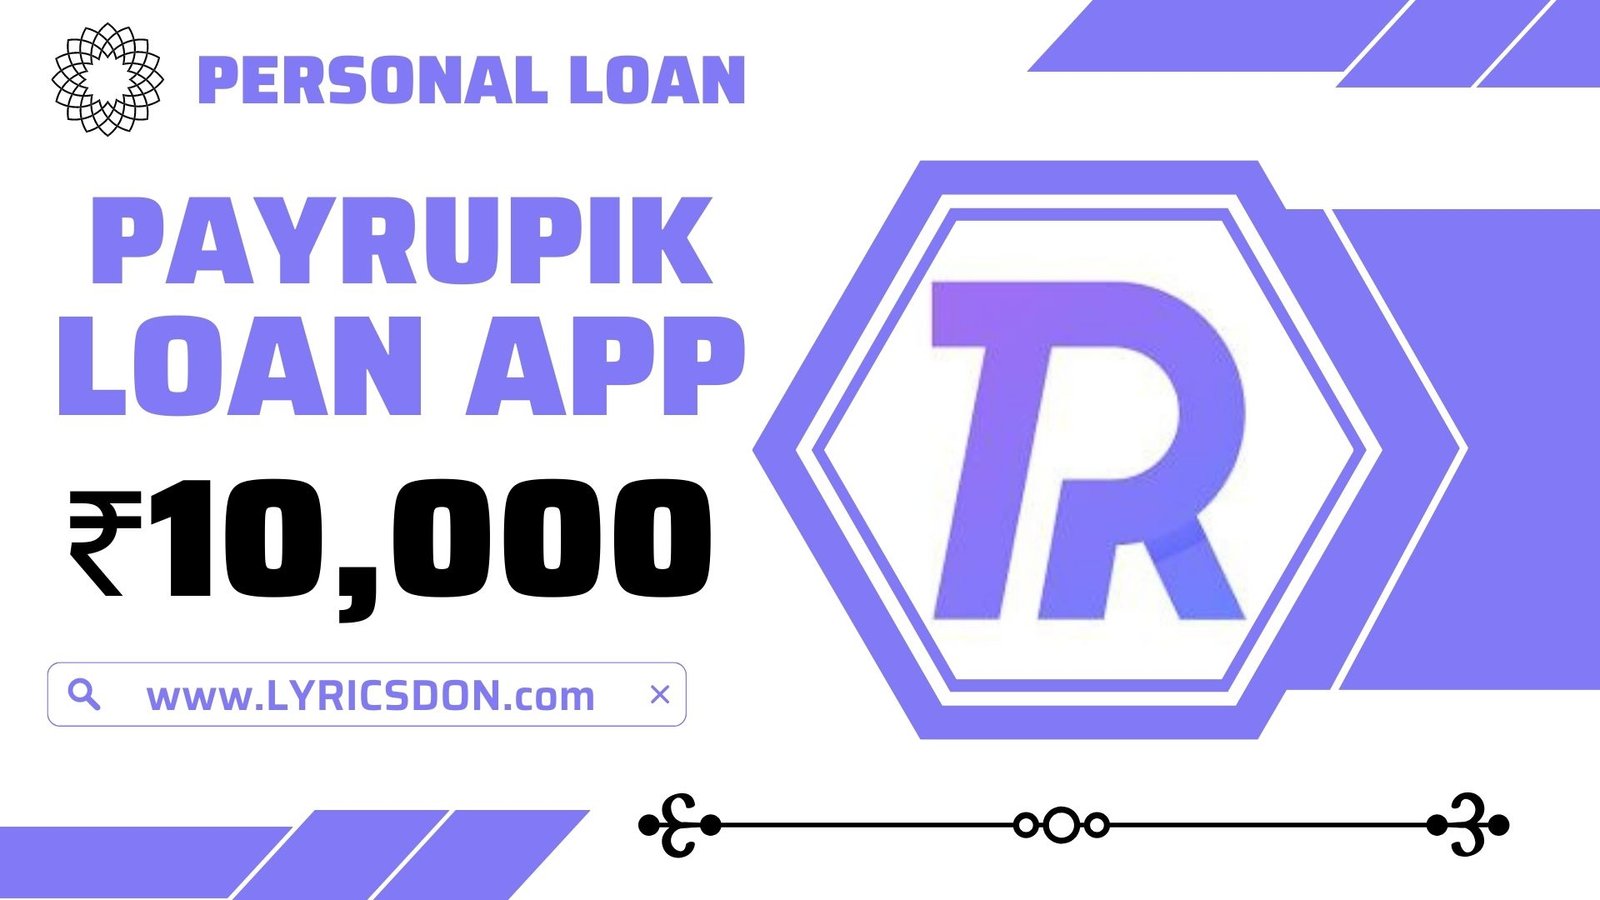 PayRupik Loan App Loan Amount